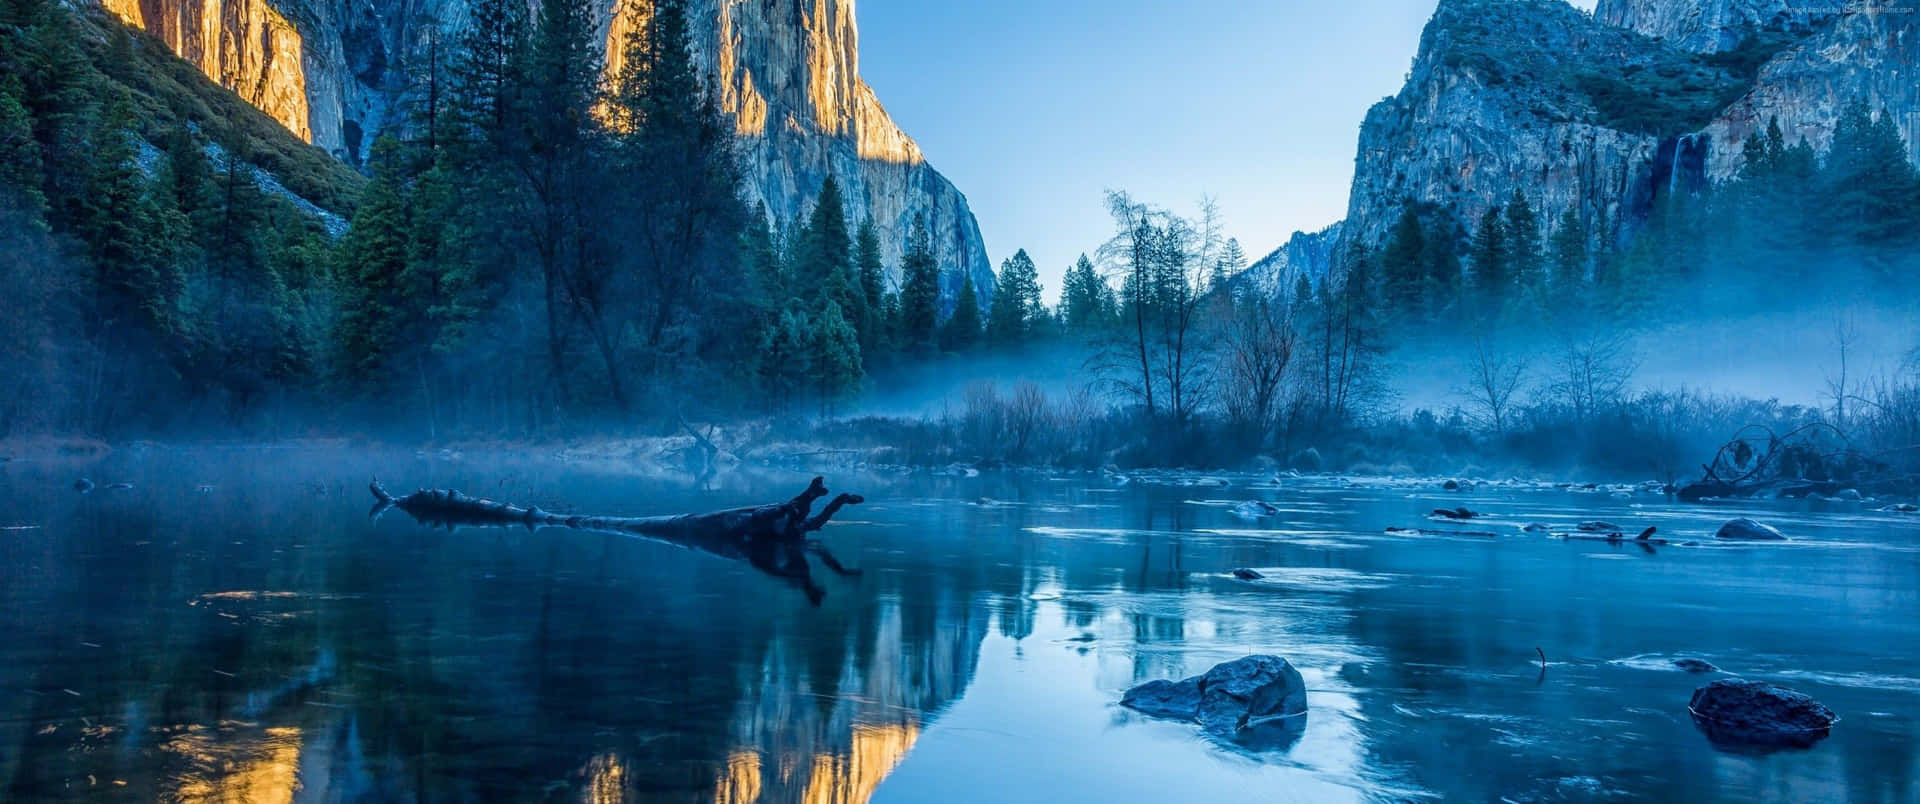 Yosemitenationalpark, Yosemite Valley, Kalifornien. Wallpaper